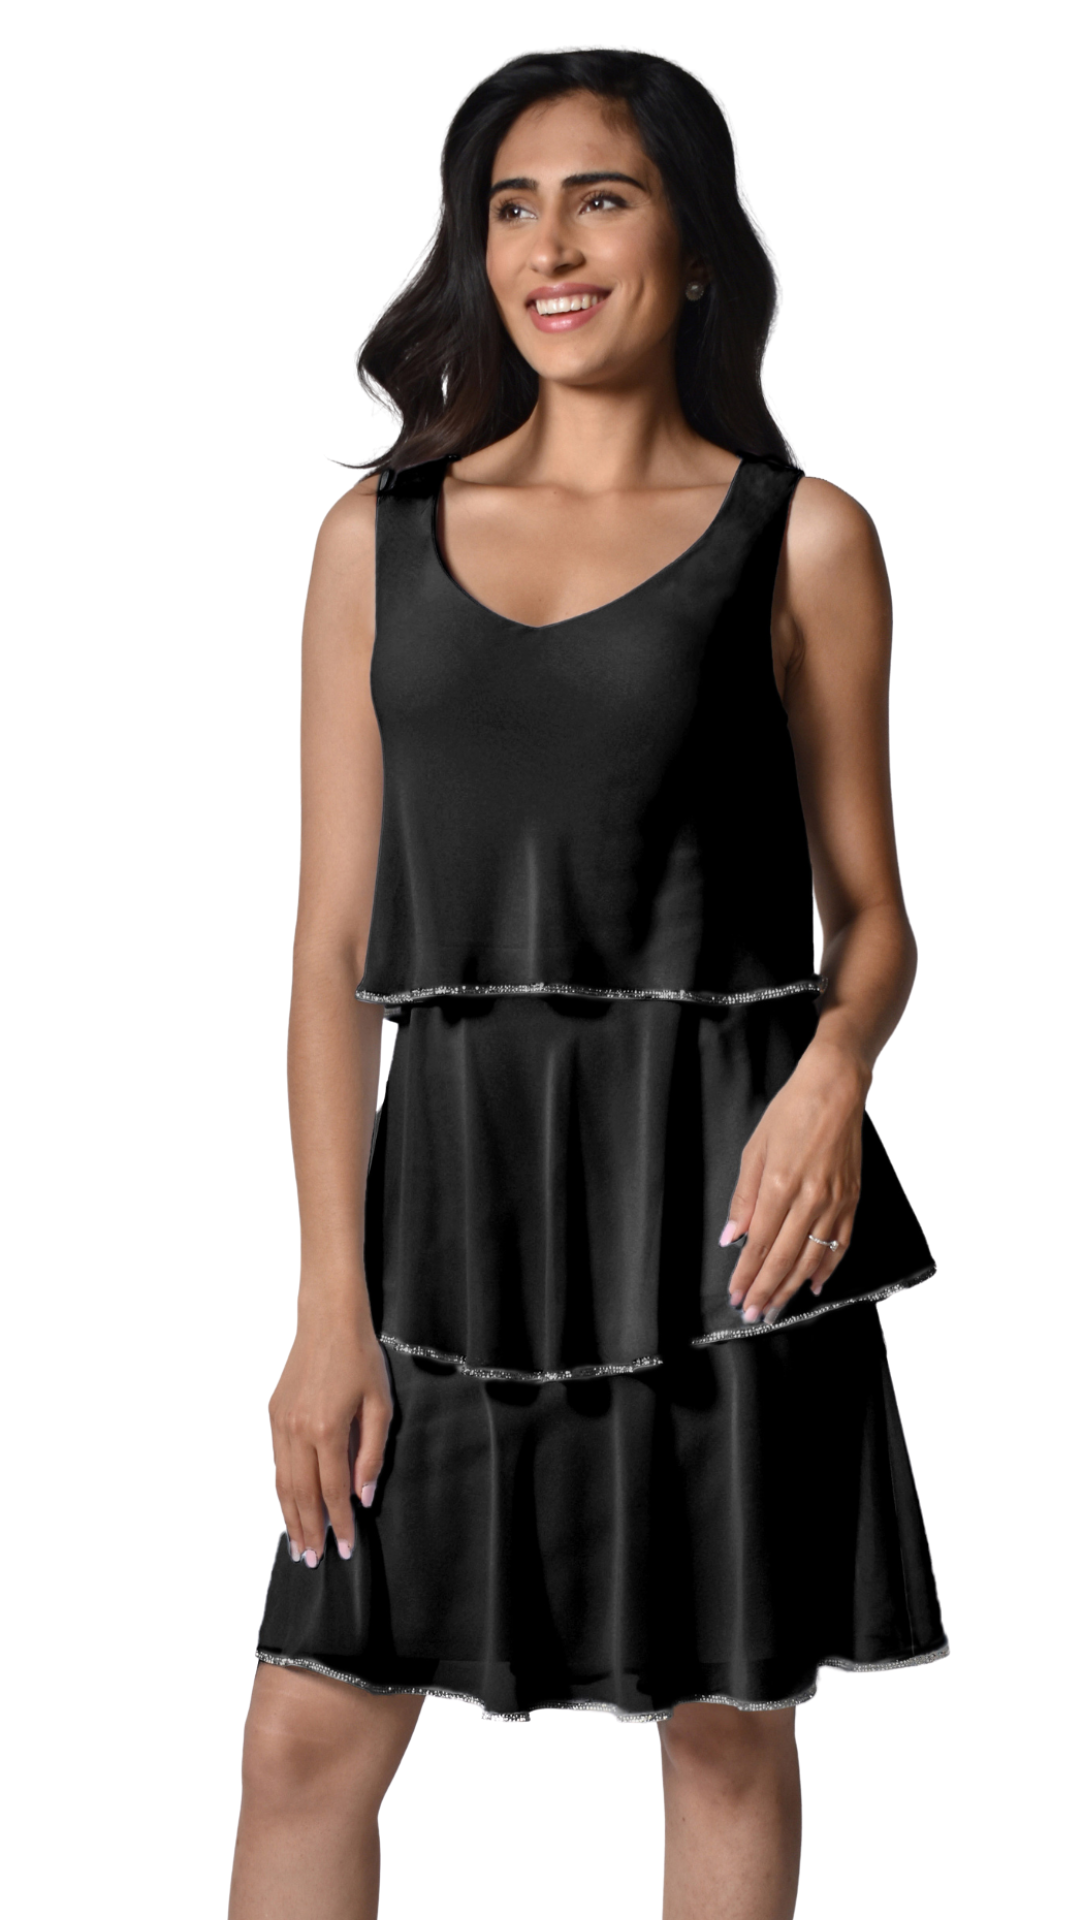 Multi Layer Rhinestone Trim Dress. Style FL228159